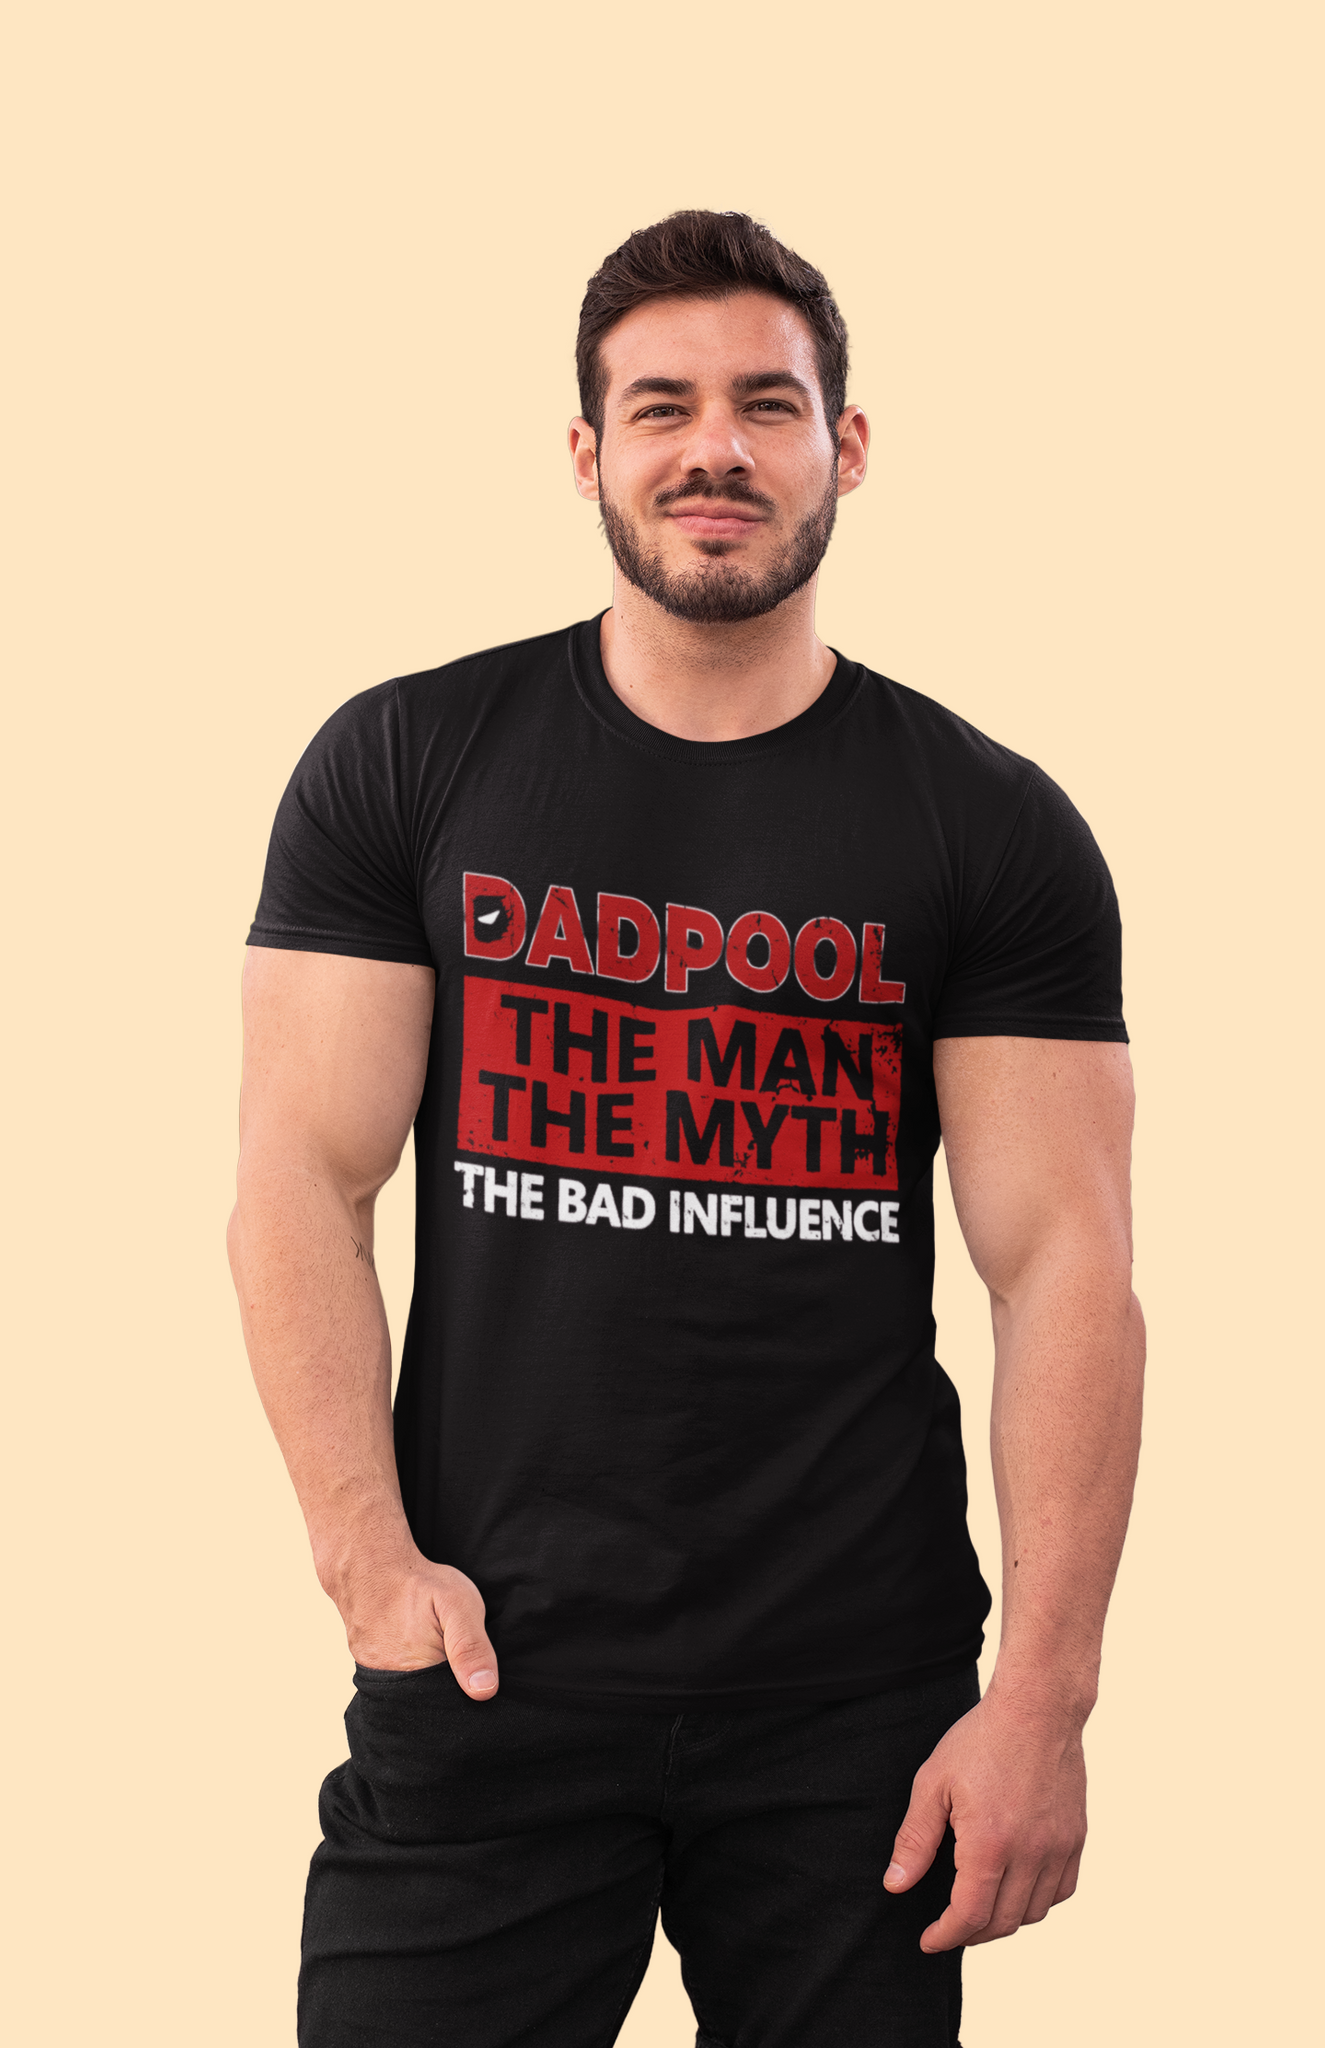 Deadpool T Shirt, The Man The Myth The Bad Influence Tshirt, Superhero Deadpool T Shirt, Fathers Day Gifts